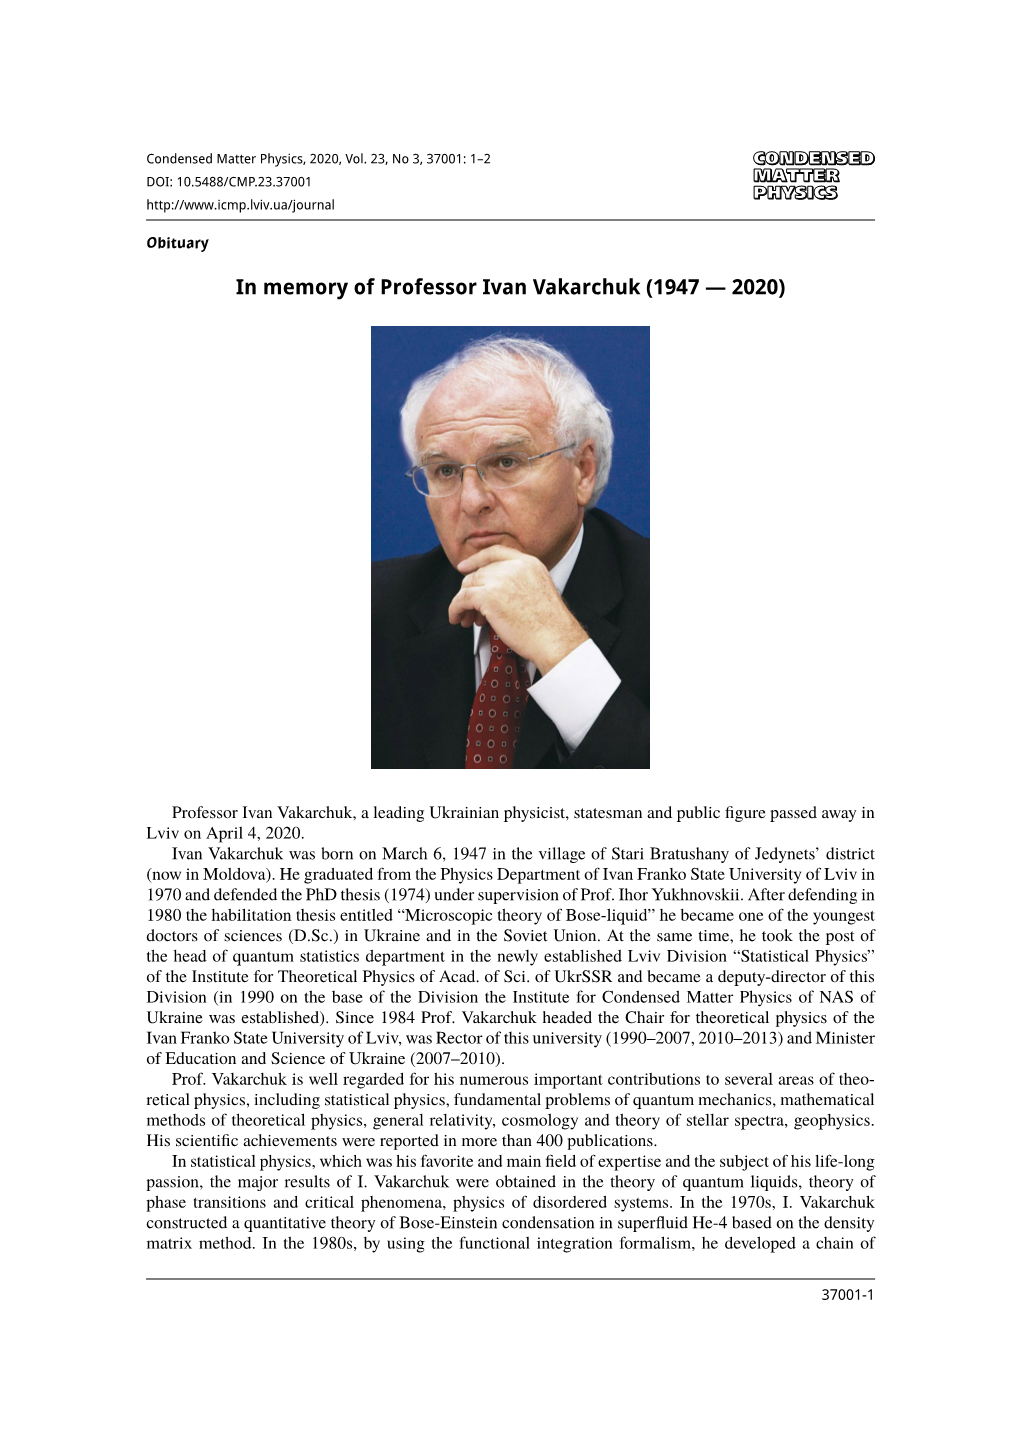 In Memory of Professor Ivan Vakarchuk (1947 — 2020)